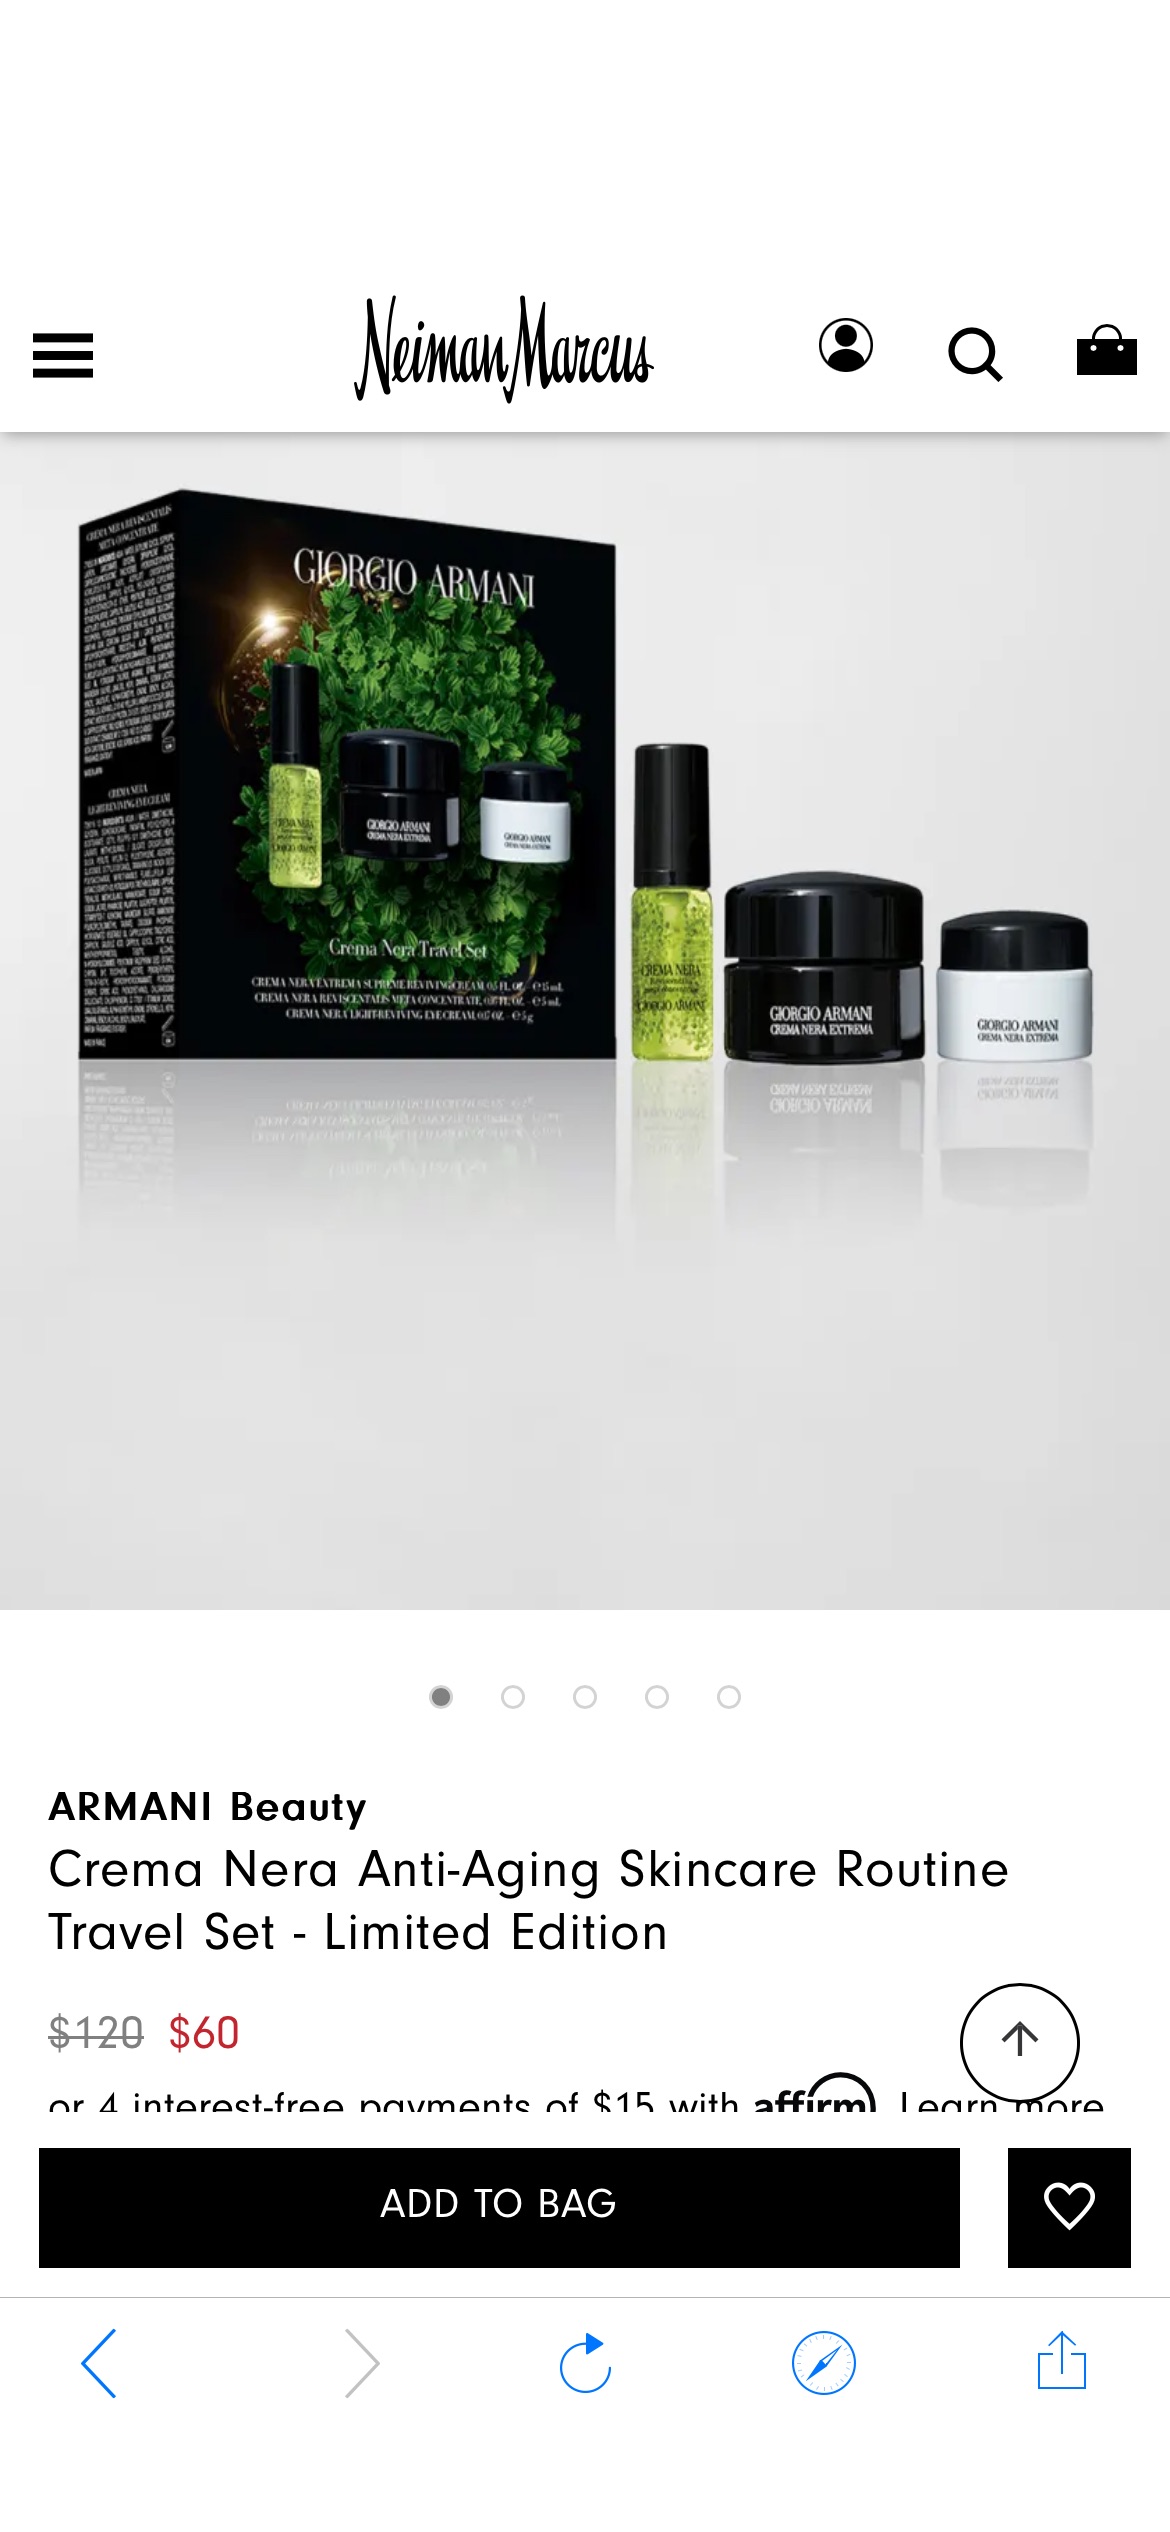 ARMANI beauty Crema Nera Anti-Aging Skincare Routine Travel Set - Limited Edition | Neiman Marcus